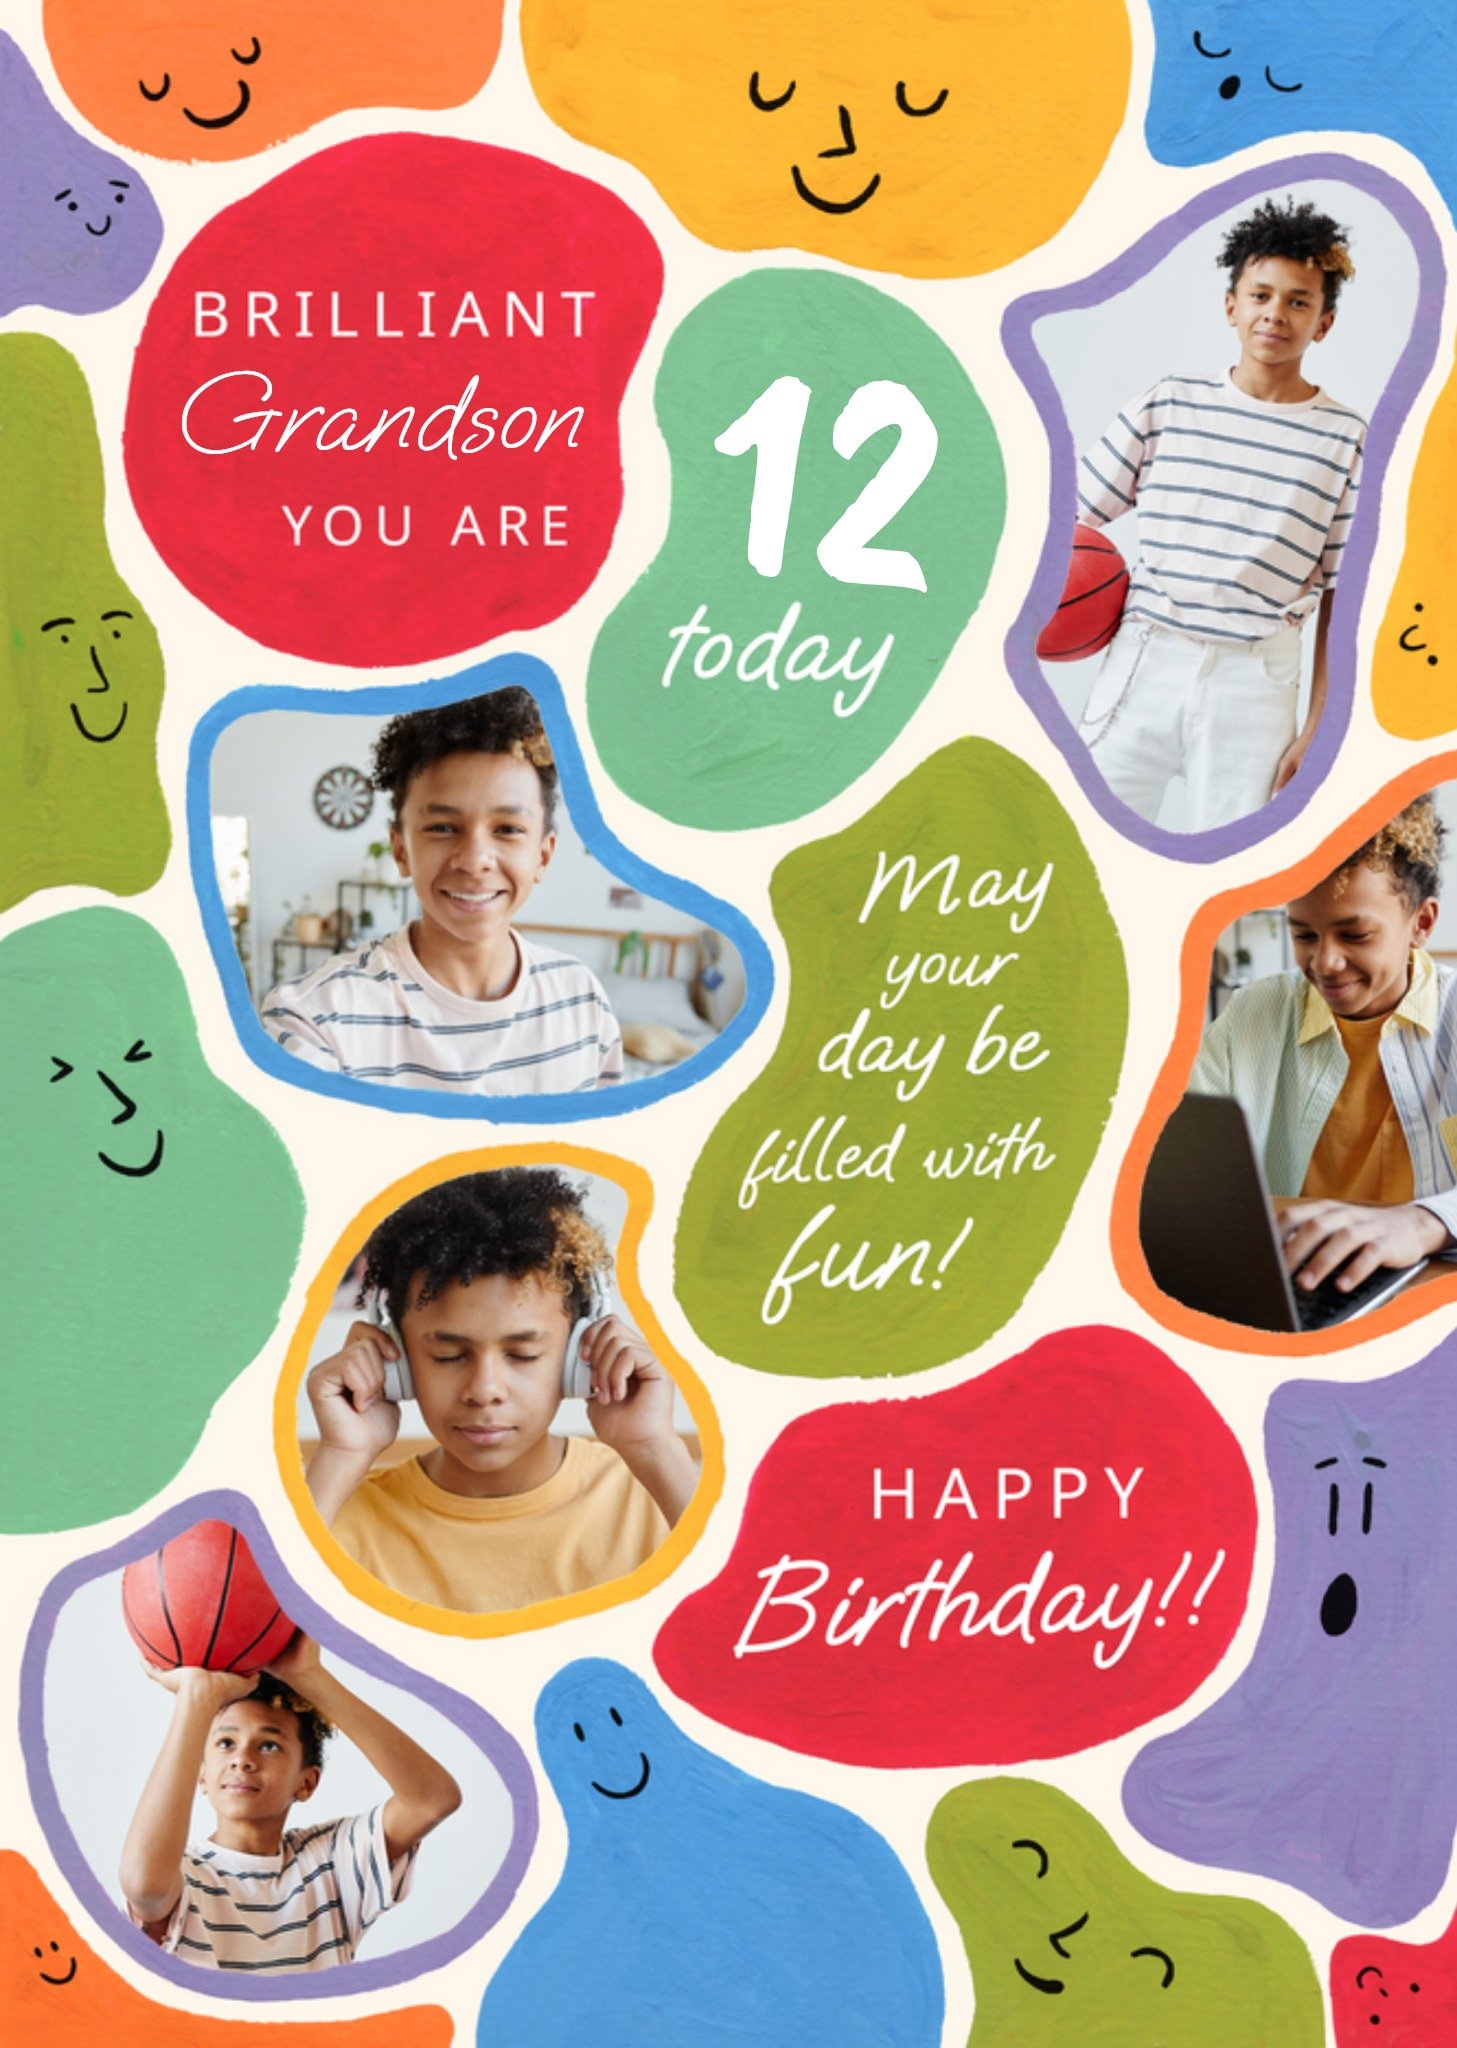 Moonpig Brilliant Grandson 12 Today Bright Fun Photo Upload Birthday Card Ecard